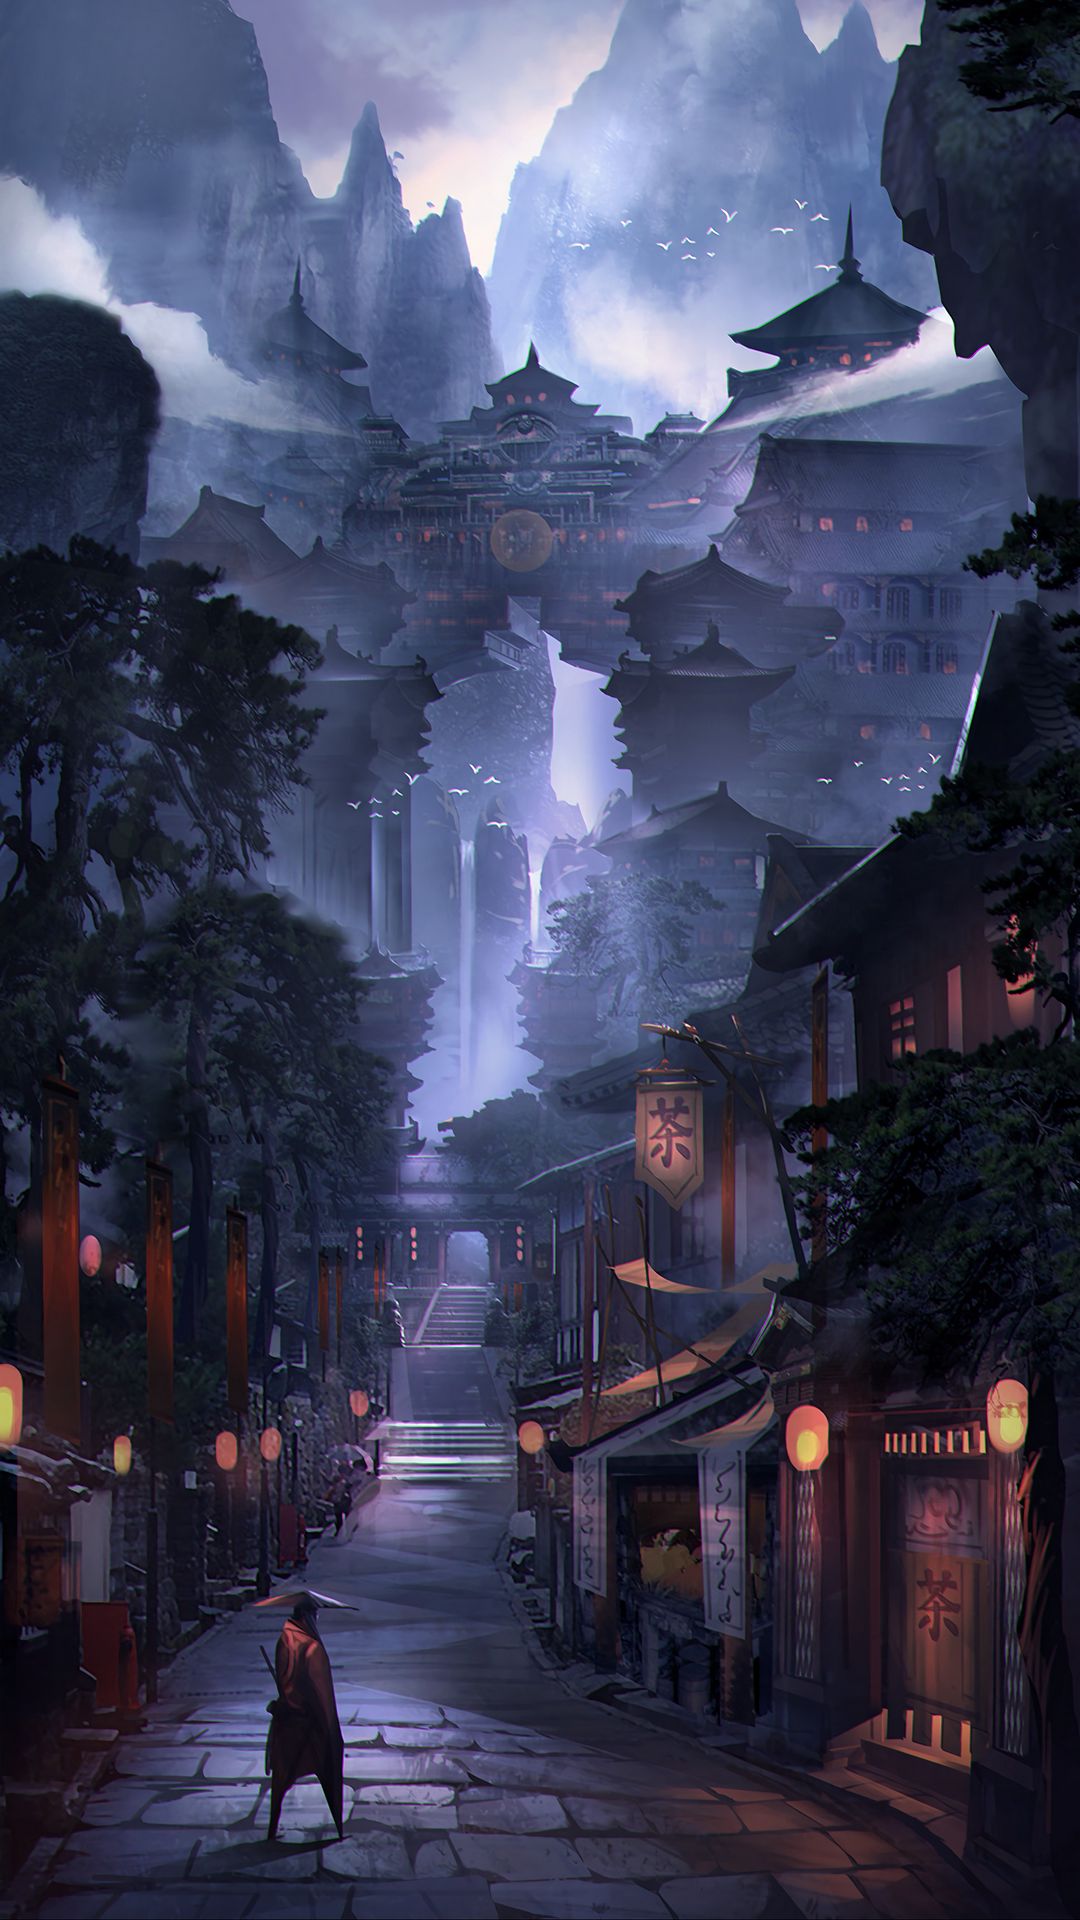 Download wallpaper 1080x1920 samurai, warrior, buildings, architecture, street, japan, art samsung galaxy s s note, sony xperia z, z z z htc one, lenovo vibe HD background